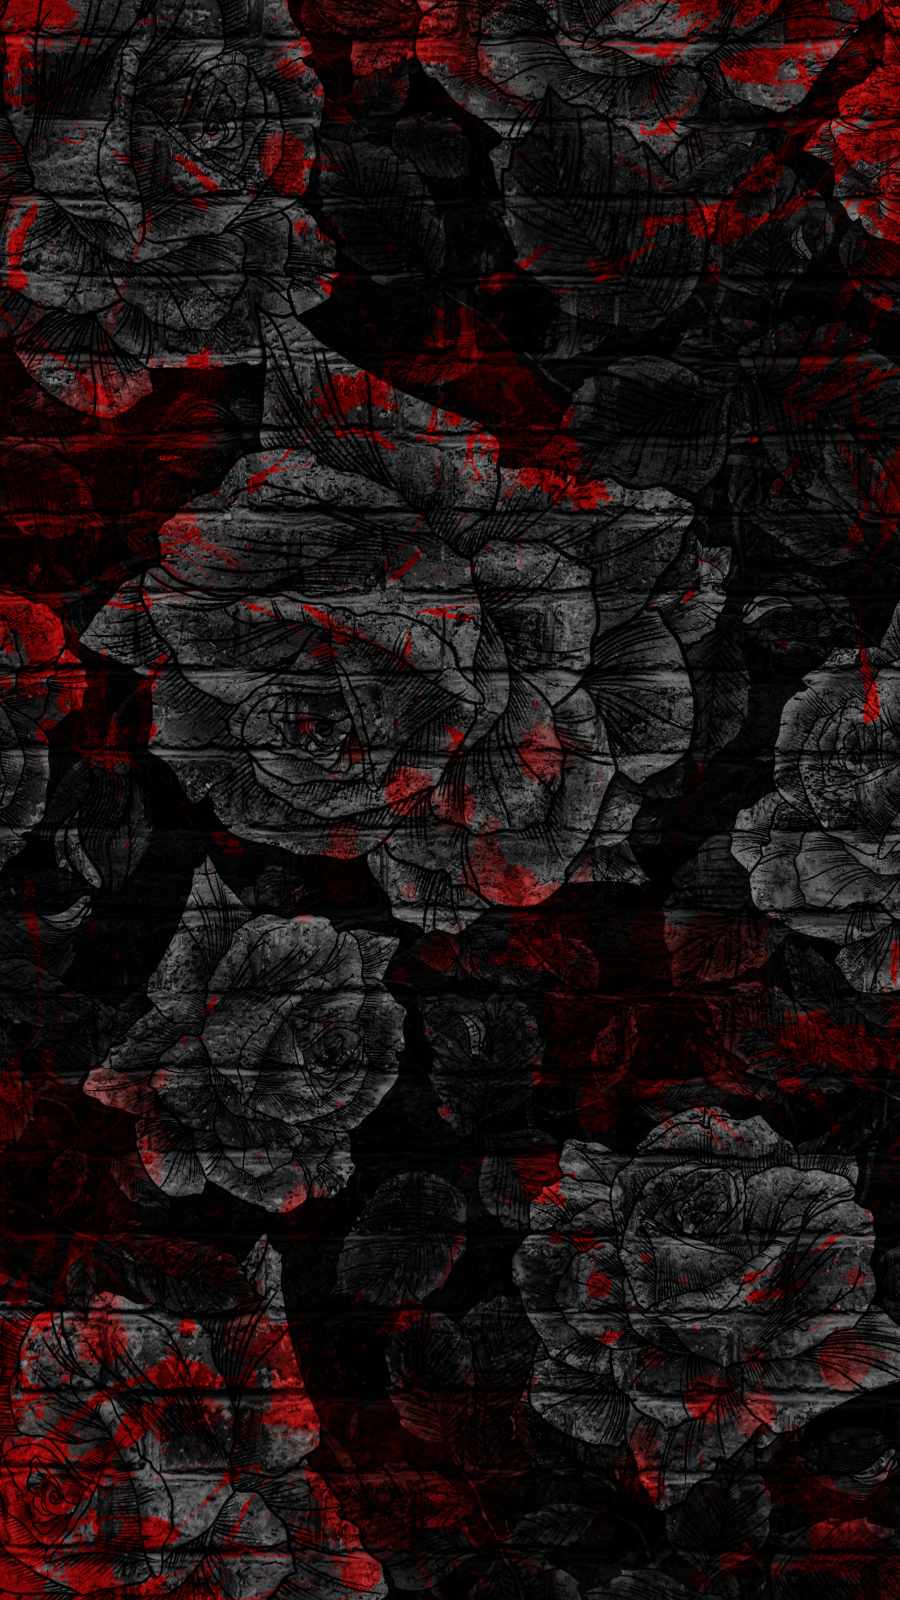 Black Roses IPhone Wallpaper - IPhone Wallpapers : iPhone Wallpapers